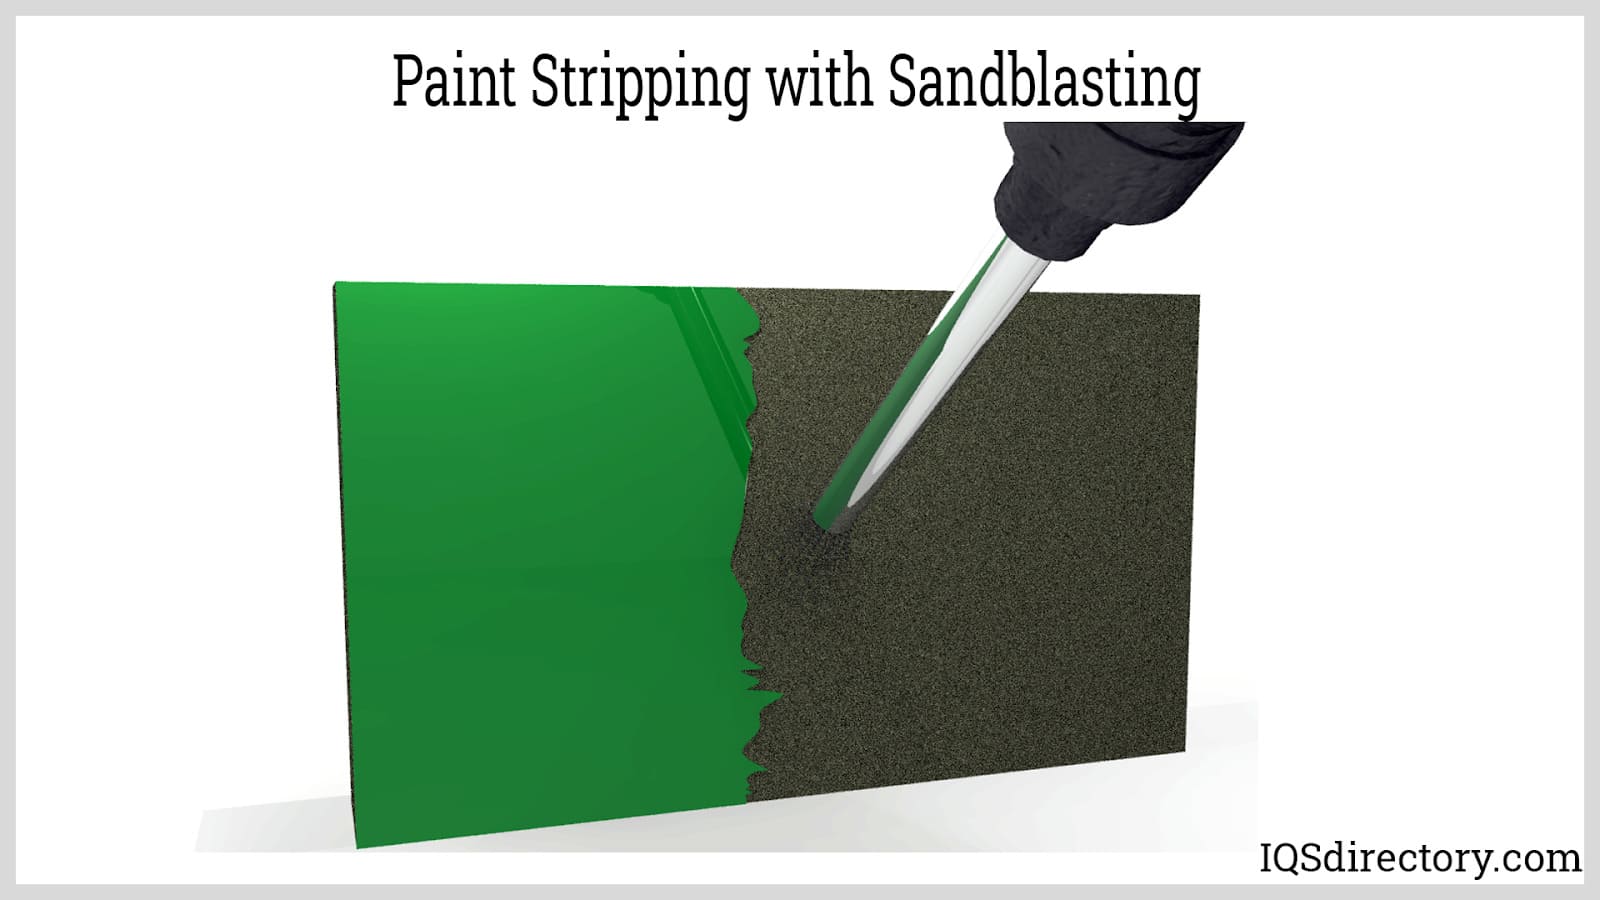 Paint Stripping with Sandblasting